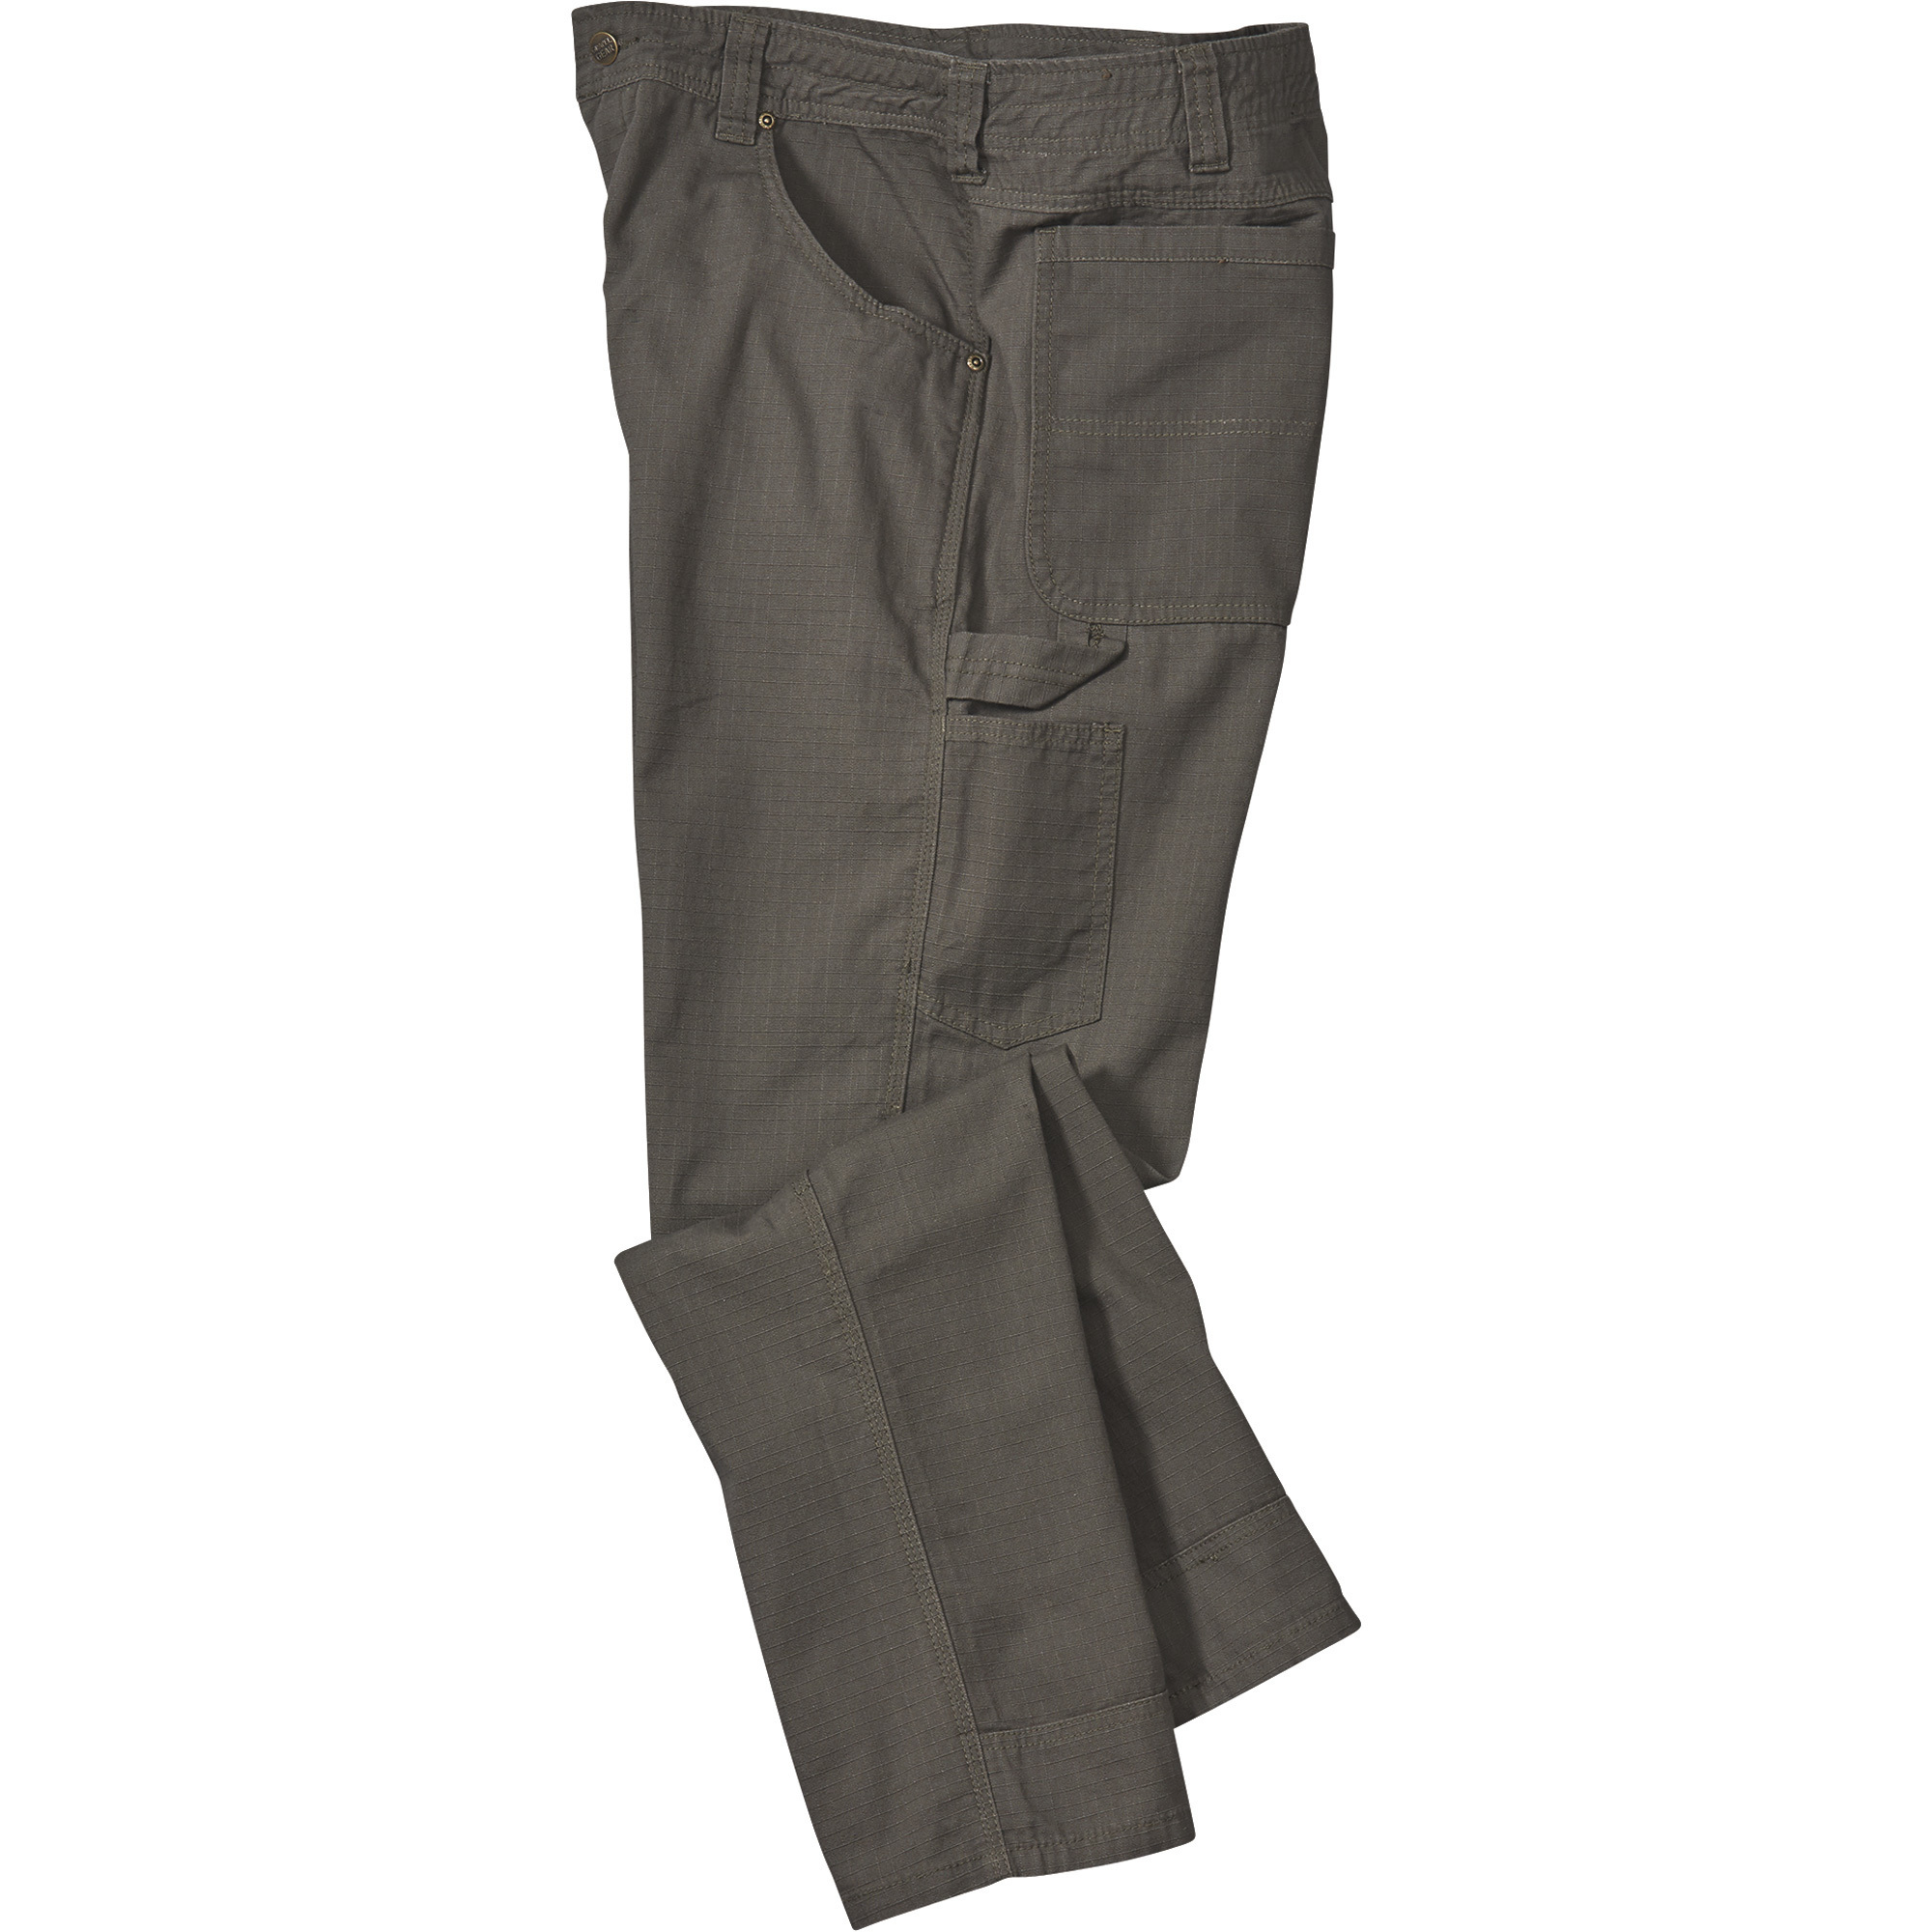 Gravel Gear Men's Cotton Ripstop Carpenter Pants with Teflon Fabric Protector â Moss, 36Inch Waist x 32Inch Inseam